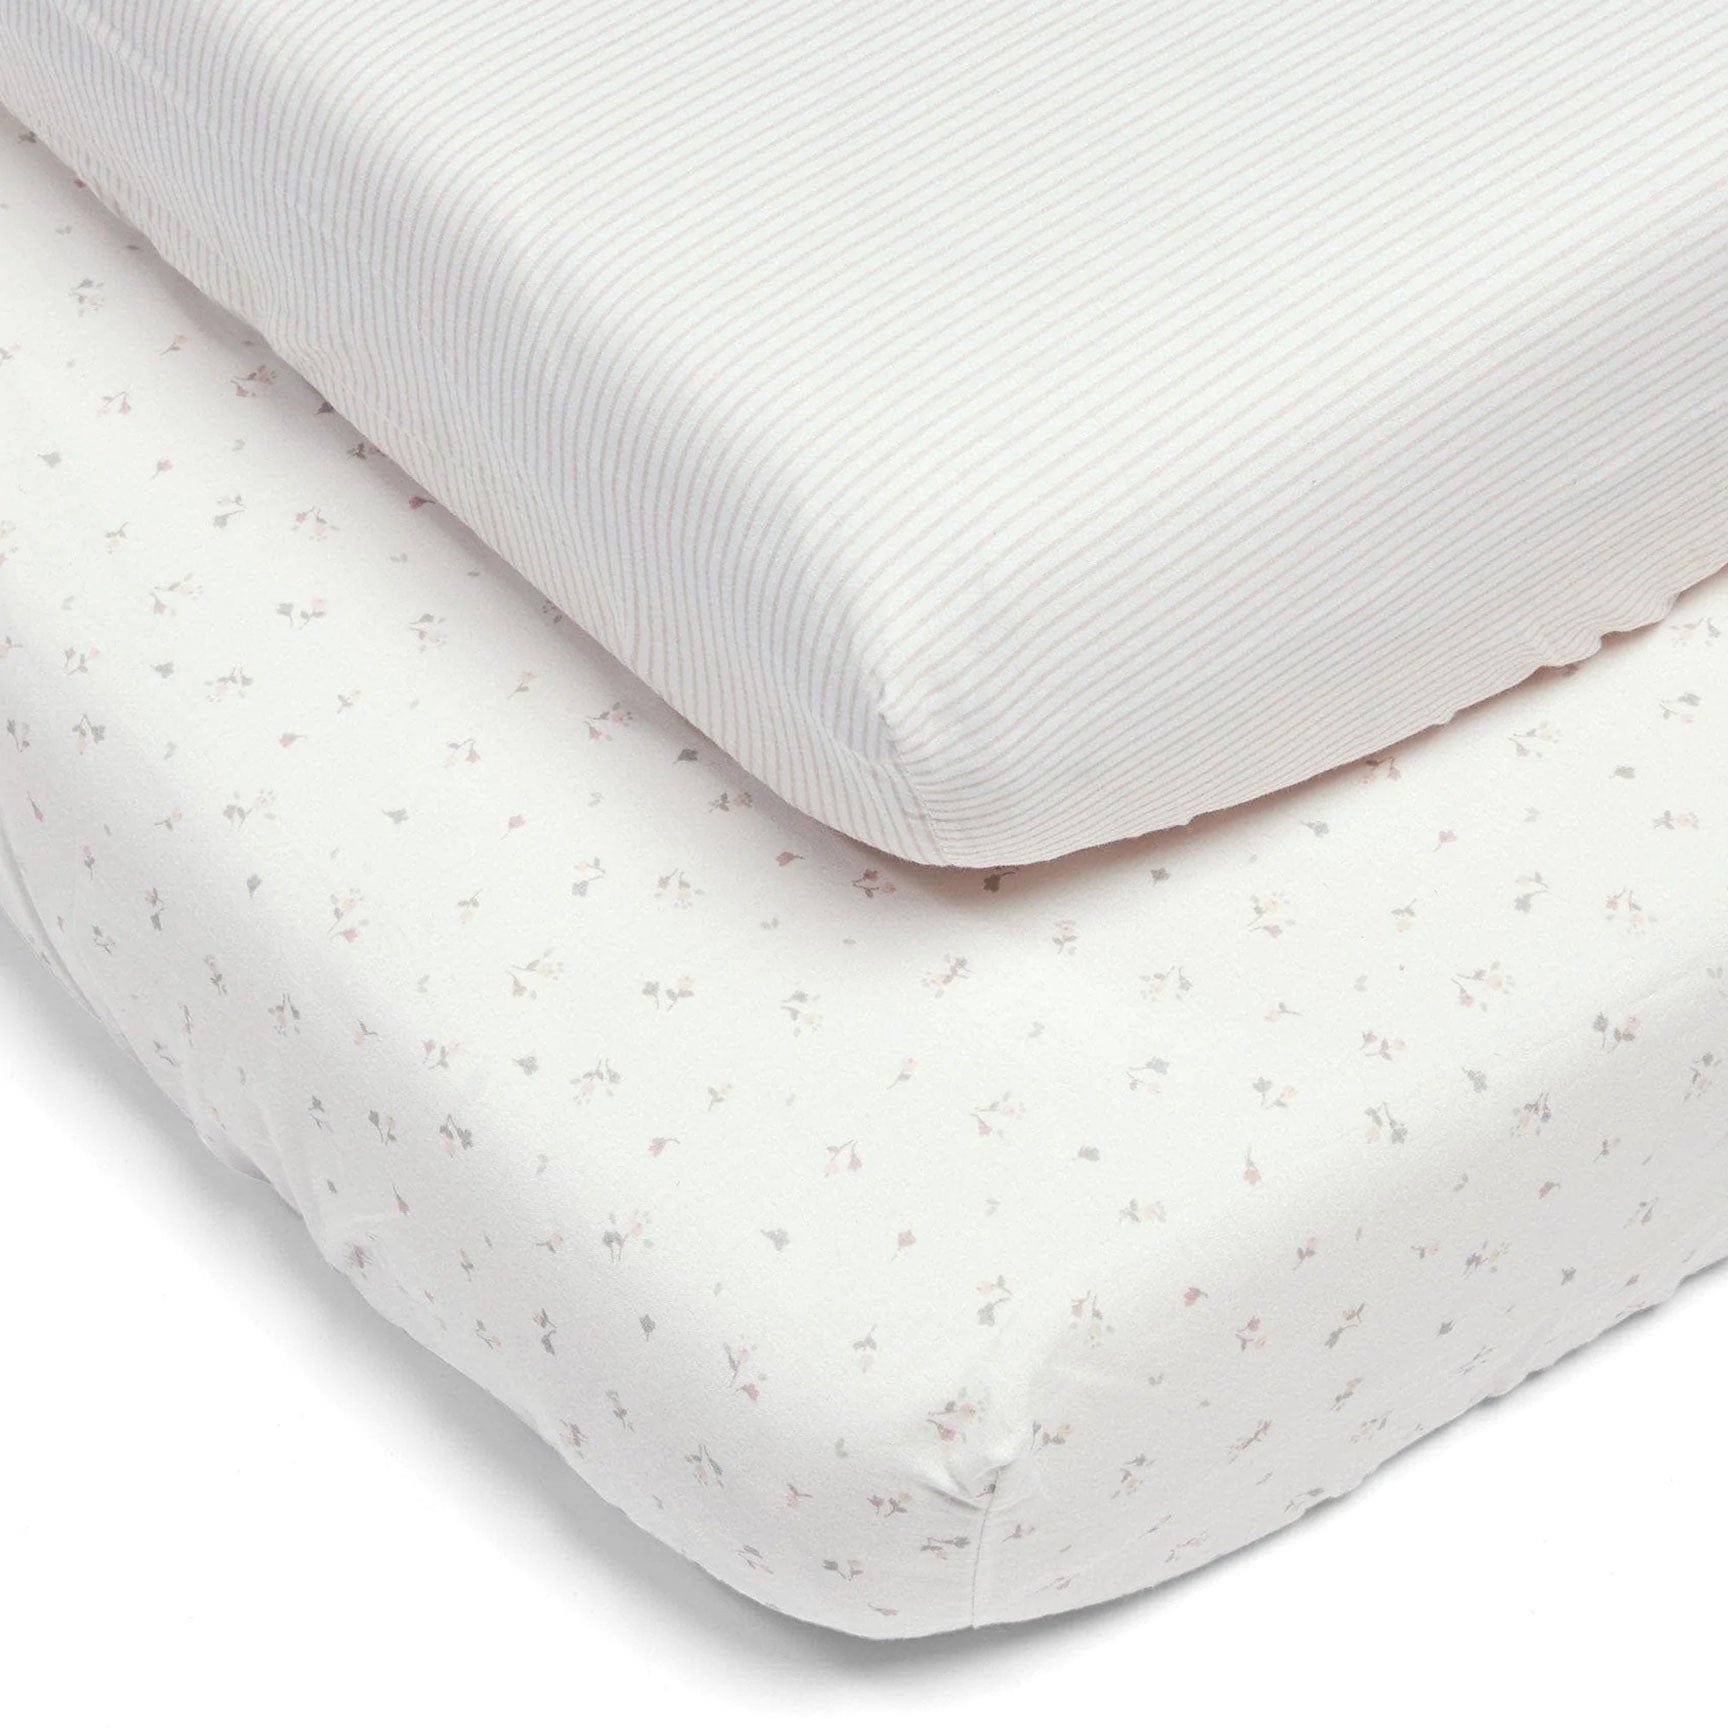 Mamas & Papas cot bed sheets Mamas & Papas Cotbed Fitted Sheets - Floral Pink 7797WW301